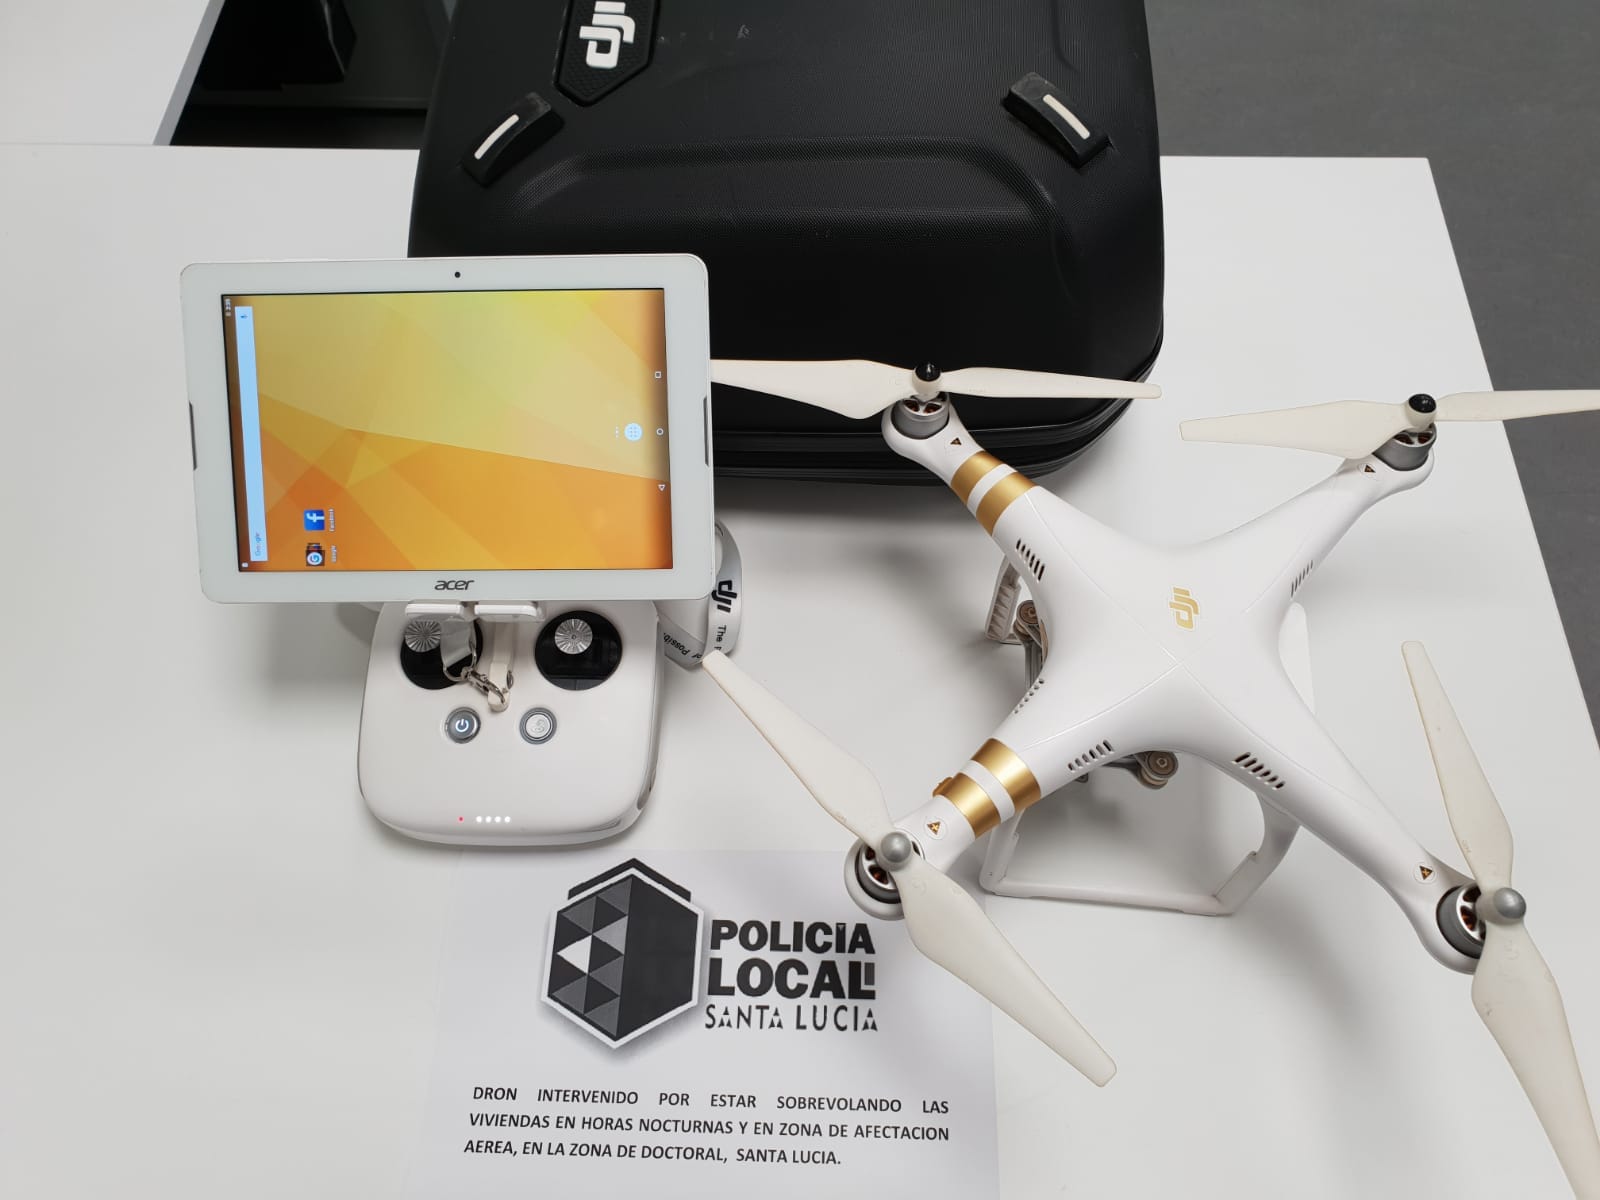 Drohne in Santa Lucia beschlagnahmt